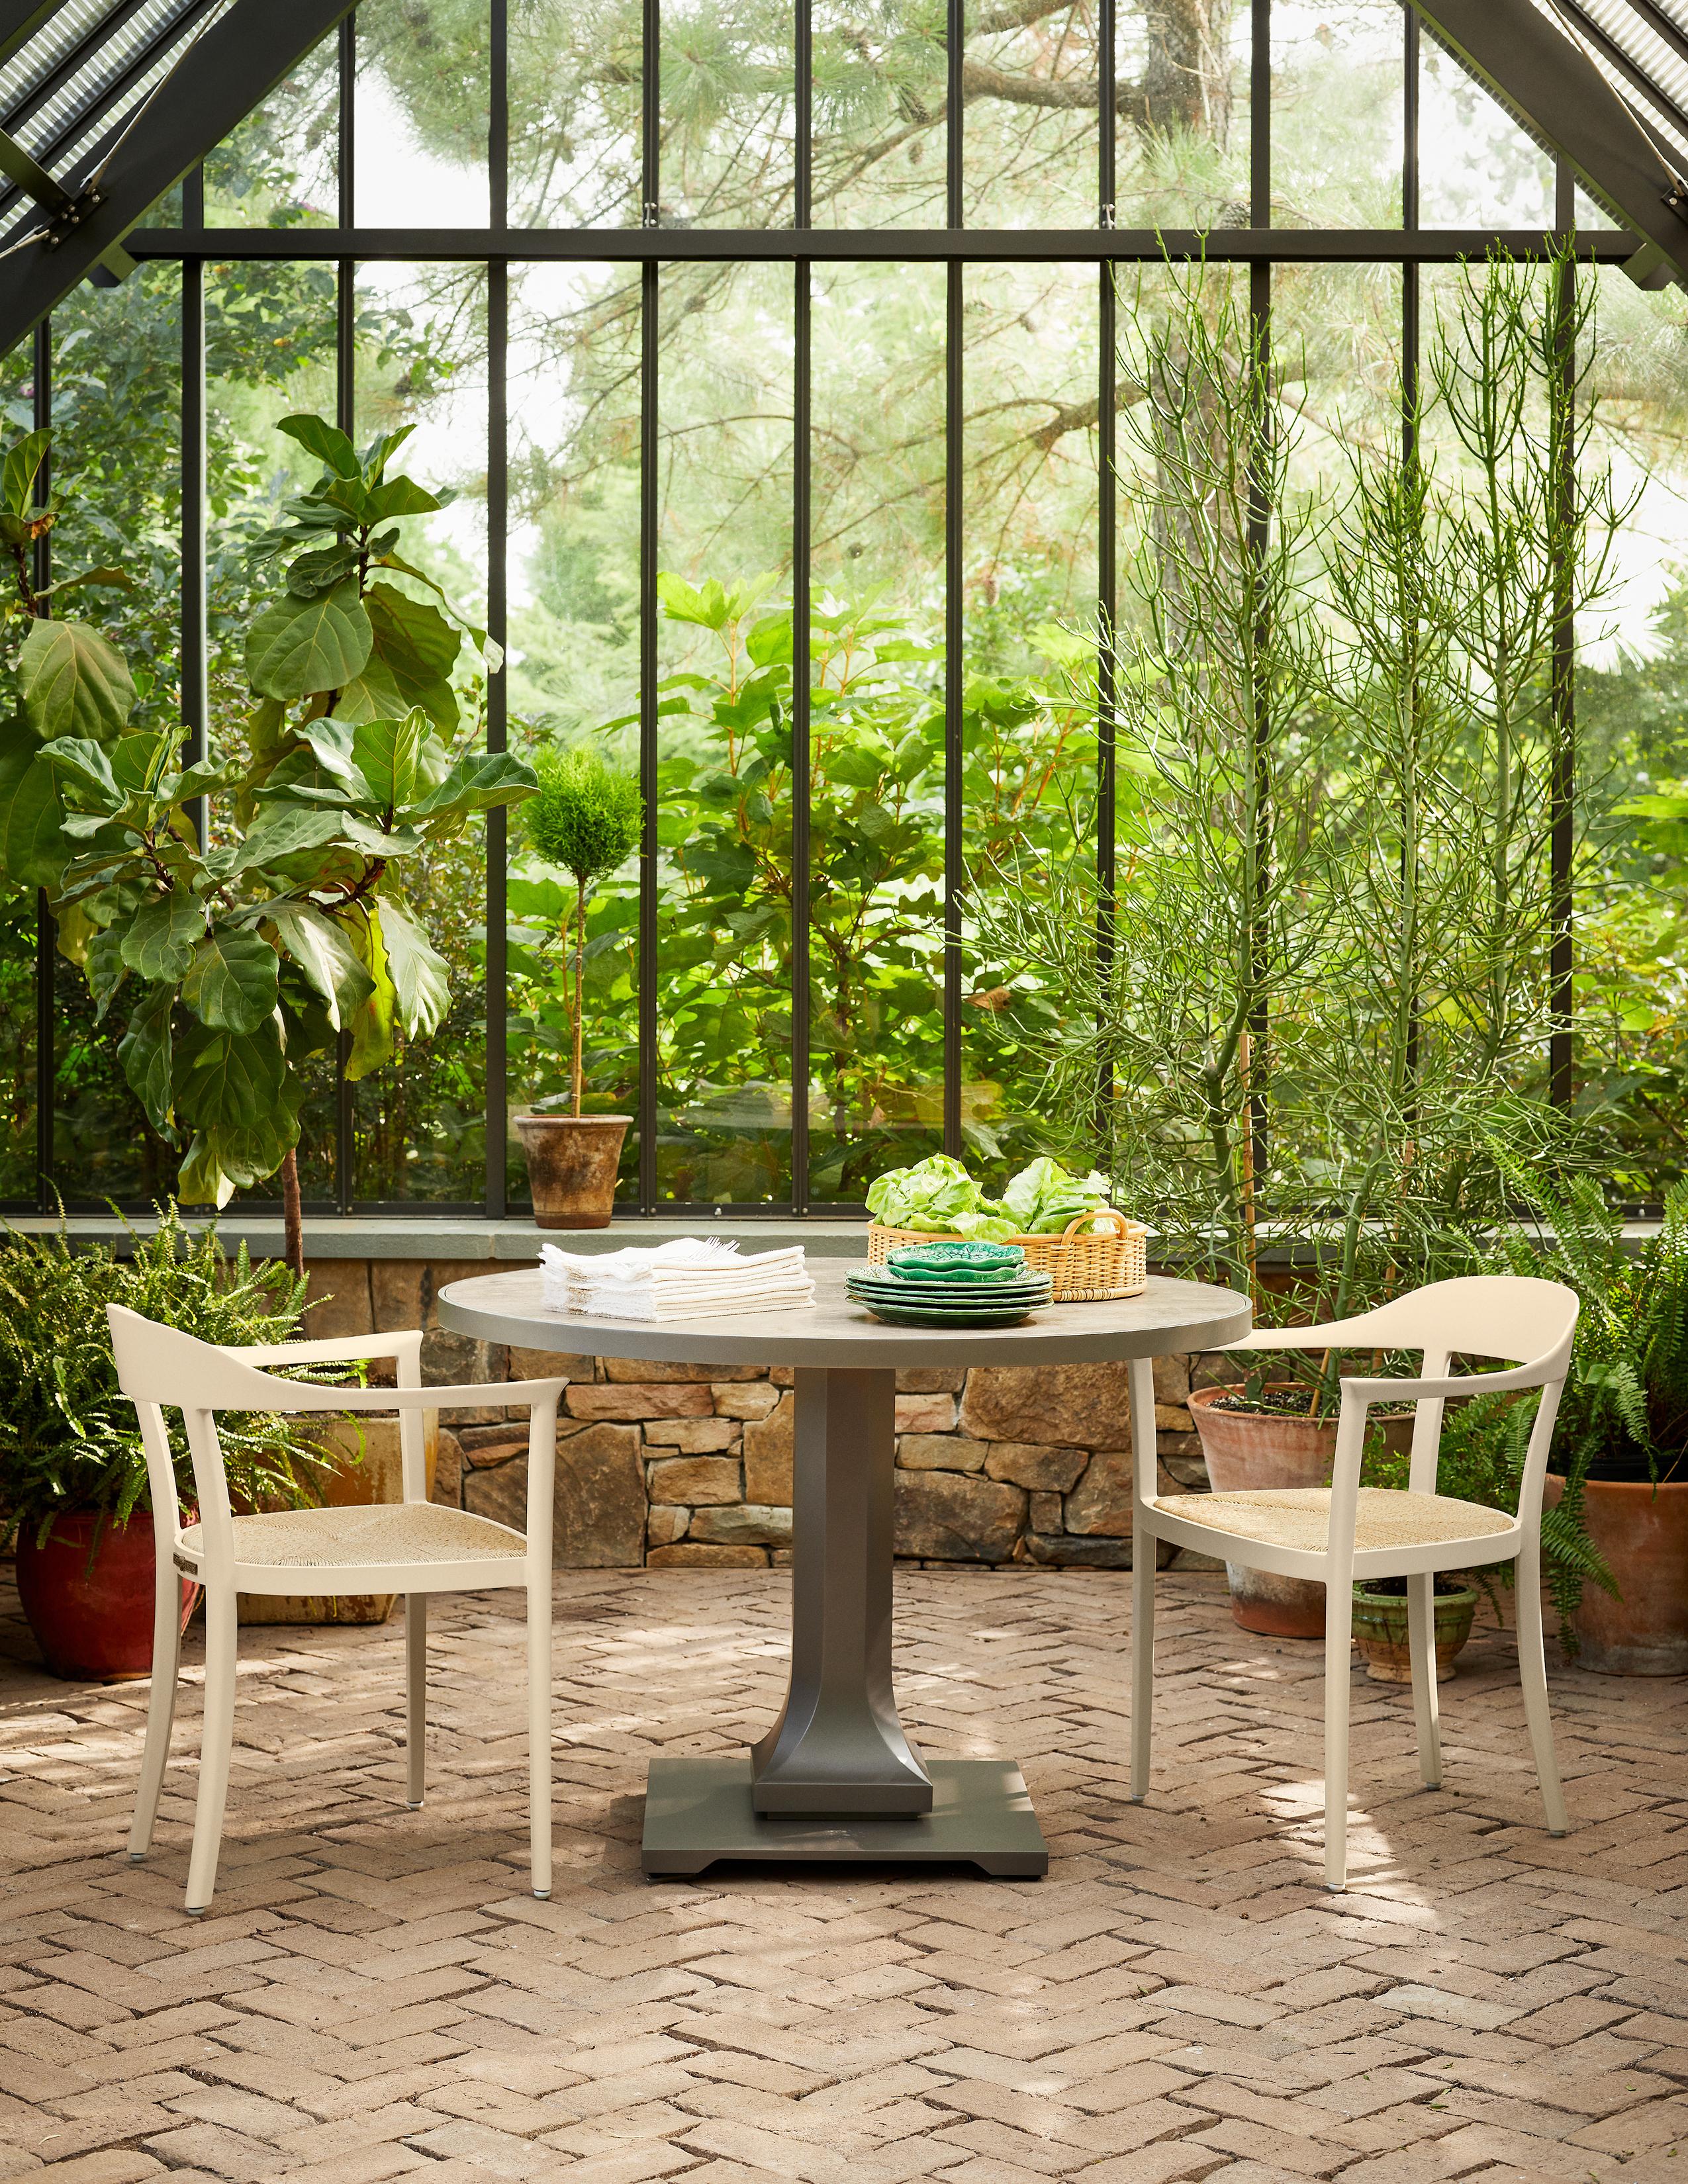 Chesapeake Dining Chair, Classic White, Woven Rush, Outdoor Garden Furniture 7